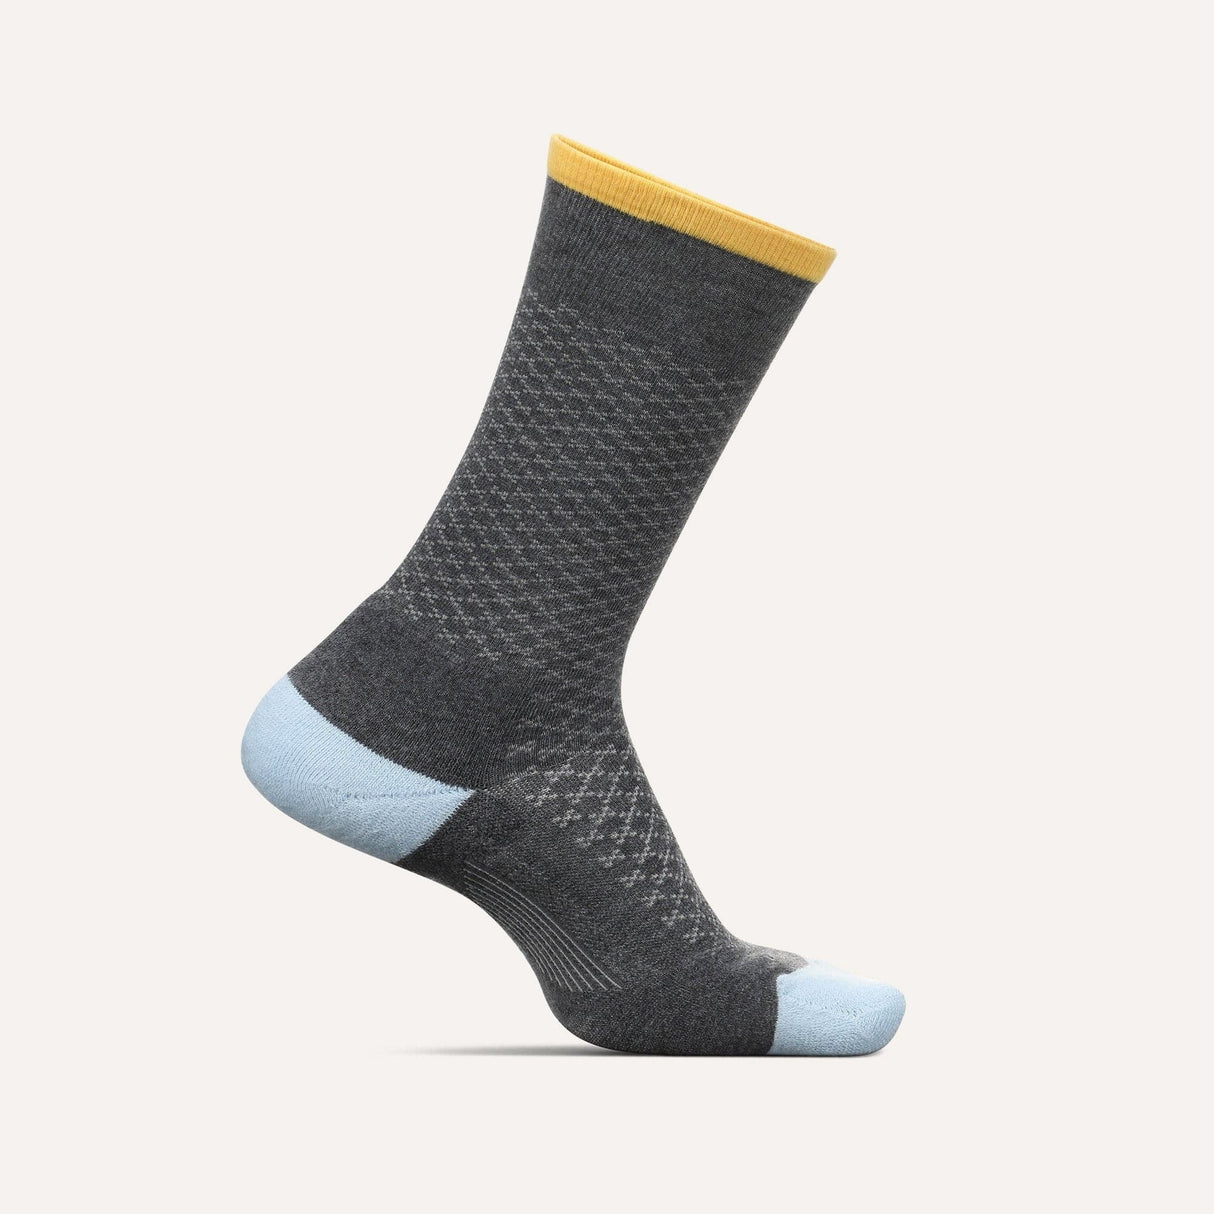 Feetures Mens Everyday Mod Jacquard Cushion Crew Socks  -  Medium / Gray